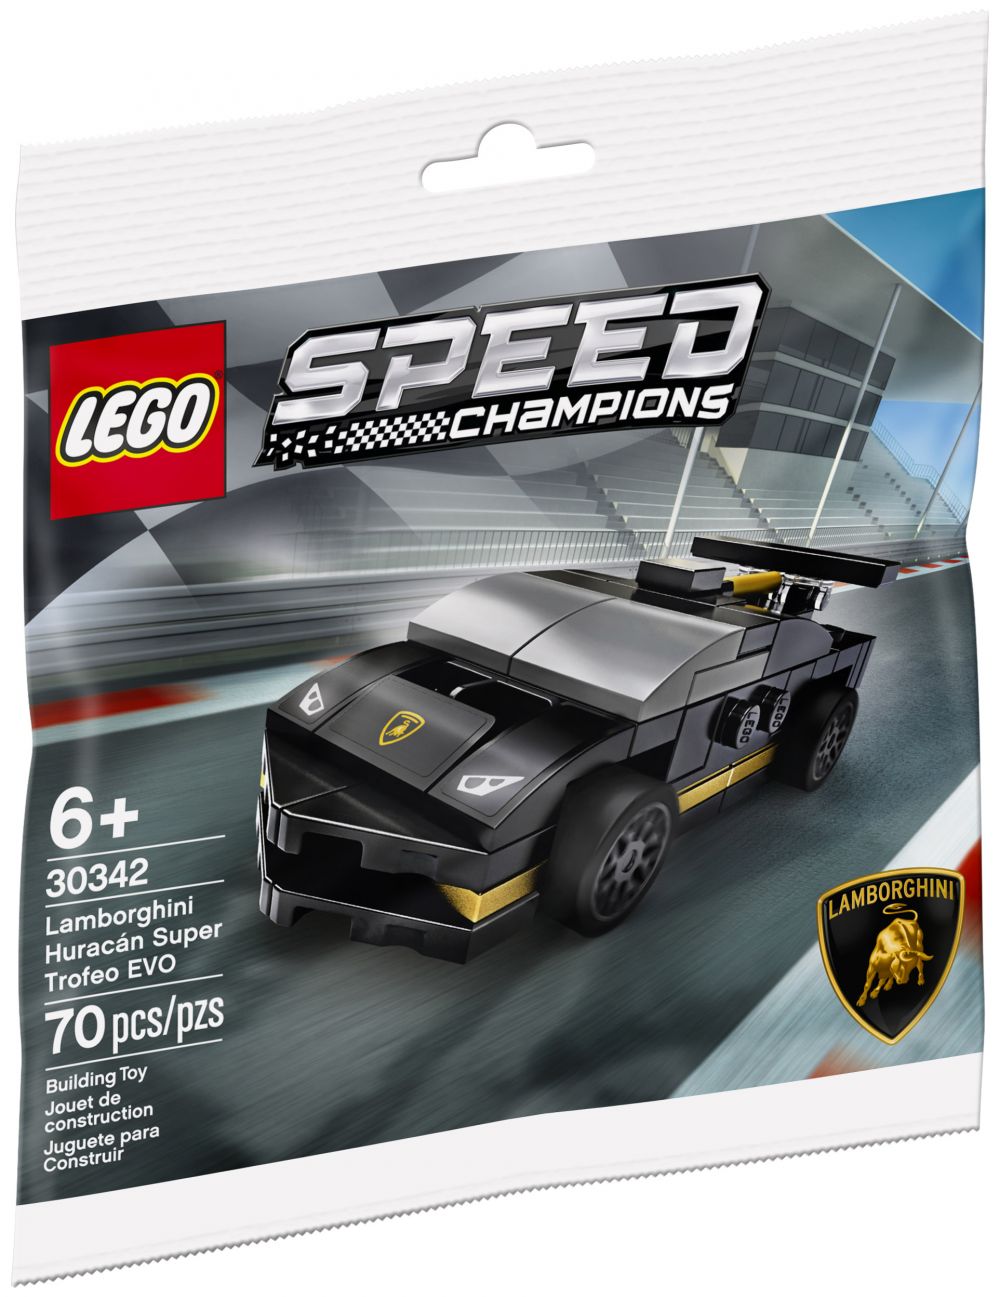 LEGO Speed Champions 30342 pas cher, Lamborghini Huracán Super